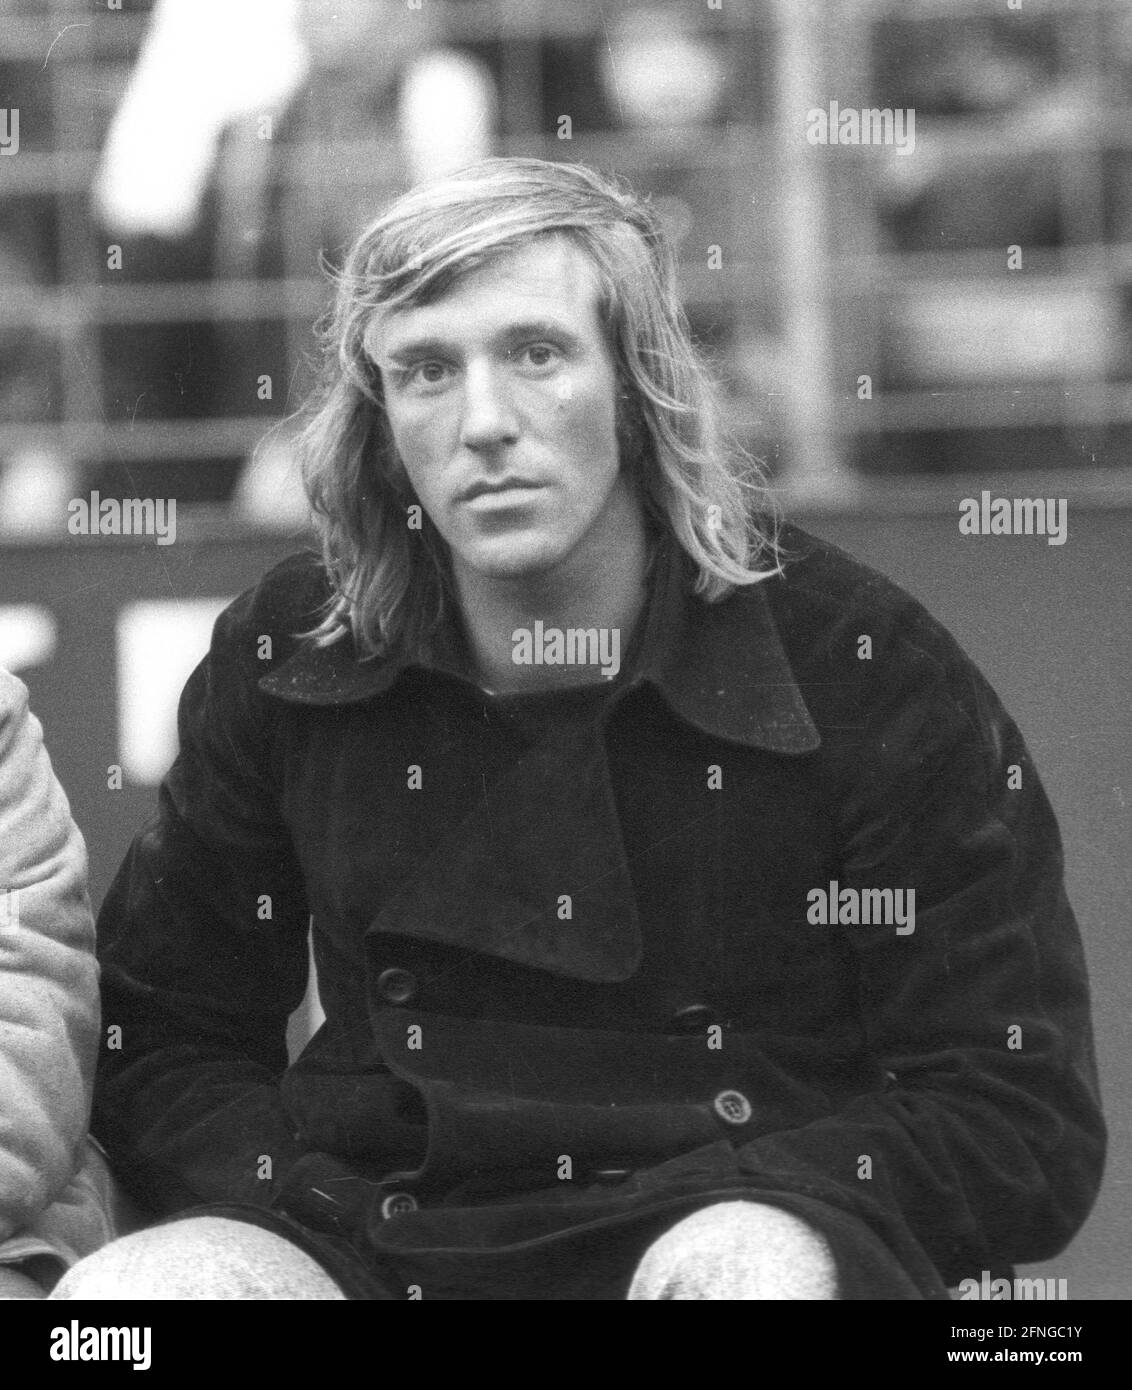 Fortuna Düsseldorf - Borussia Mönchengladbach on 17.02.1973 Günter Netzer in civilian clothes on the bench [automated translation] Stock Photo